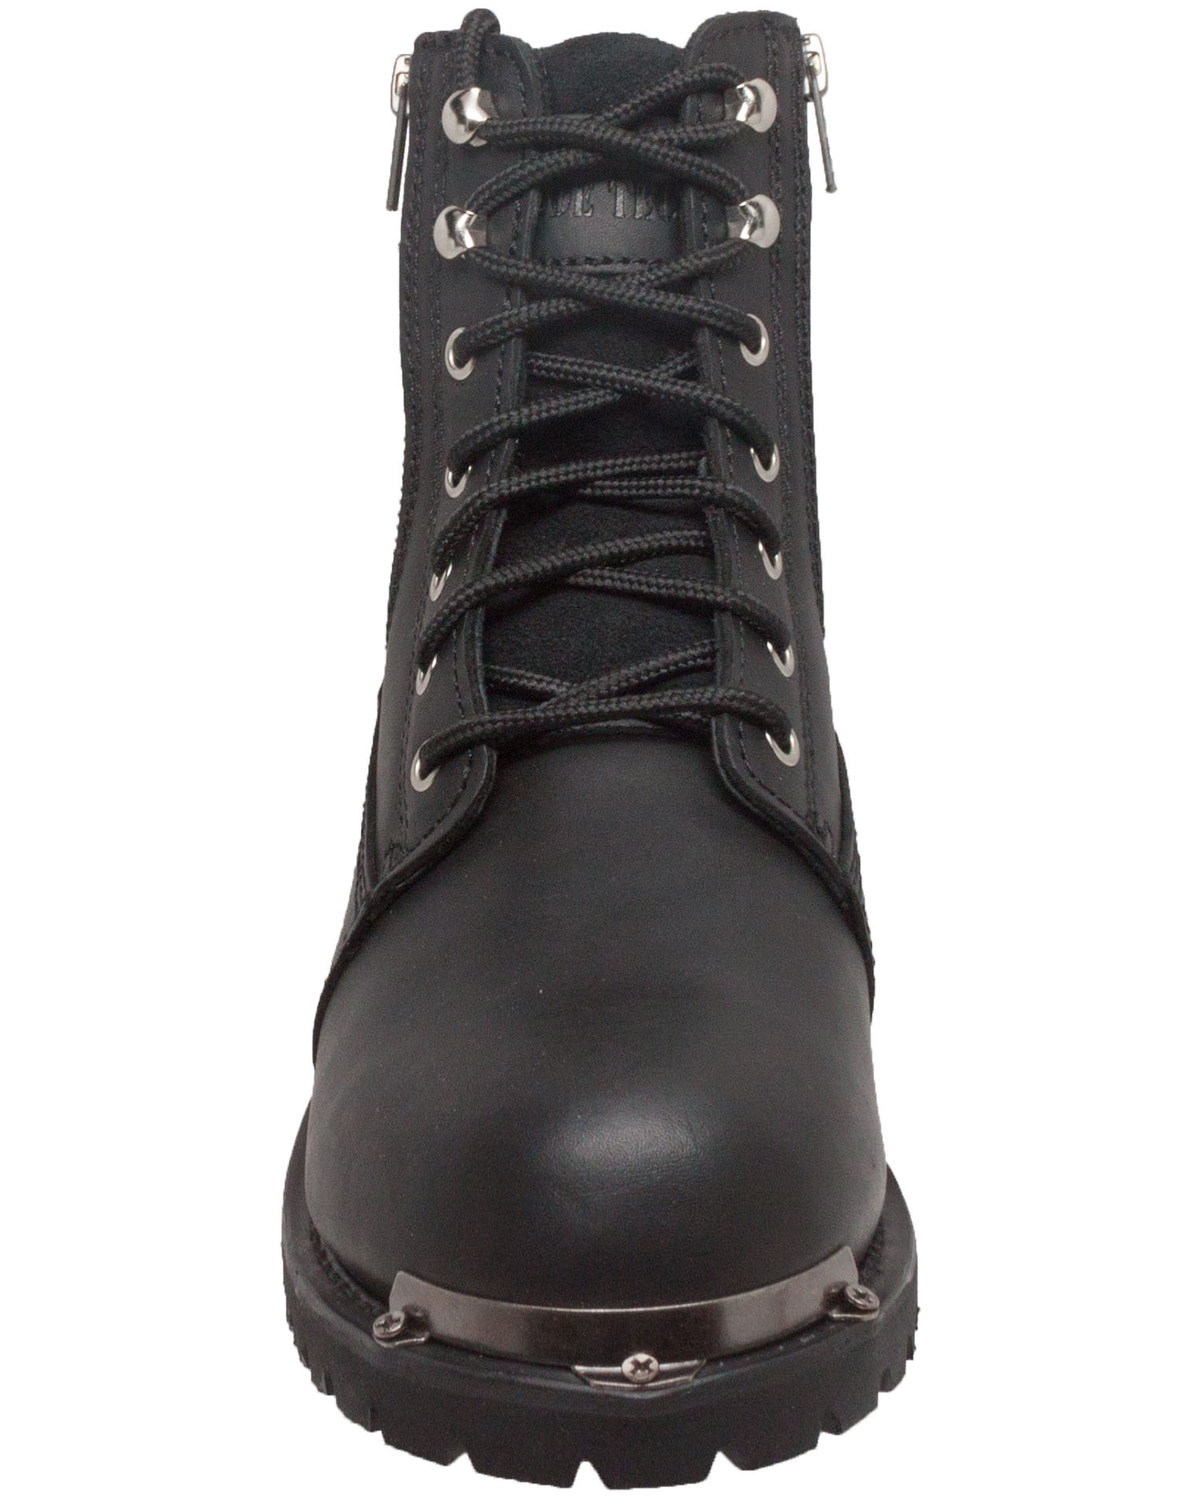 Hypard Men's 6" Reflective Double Zipper Biker Black Boot Size in 9.5, W - image 4 of 5